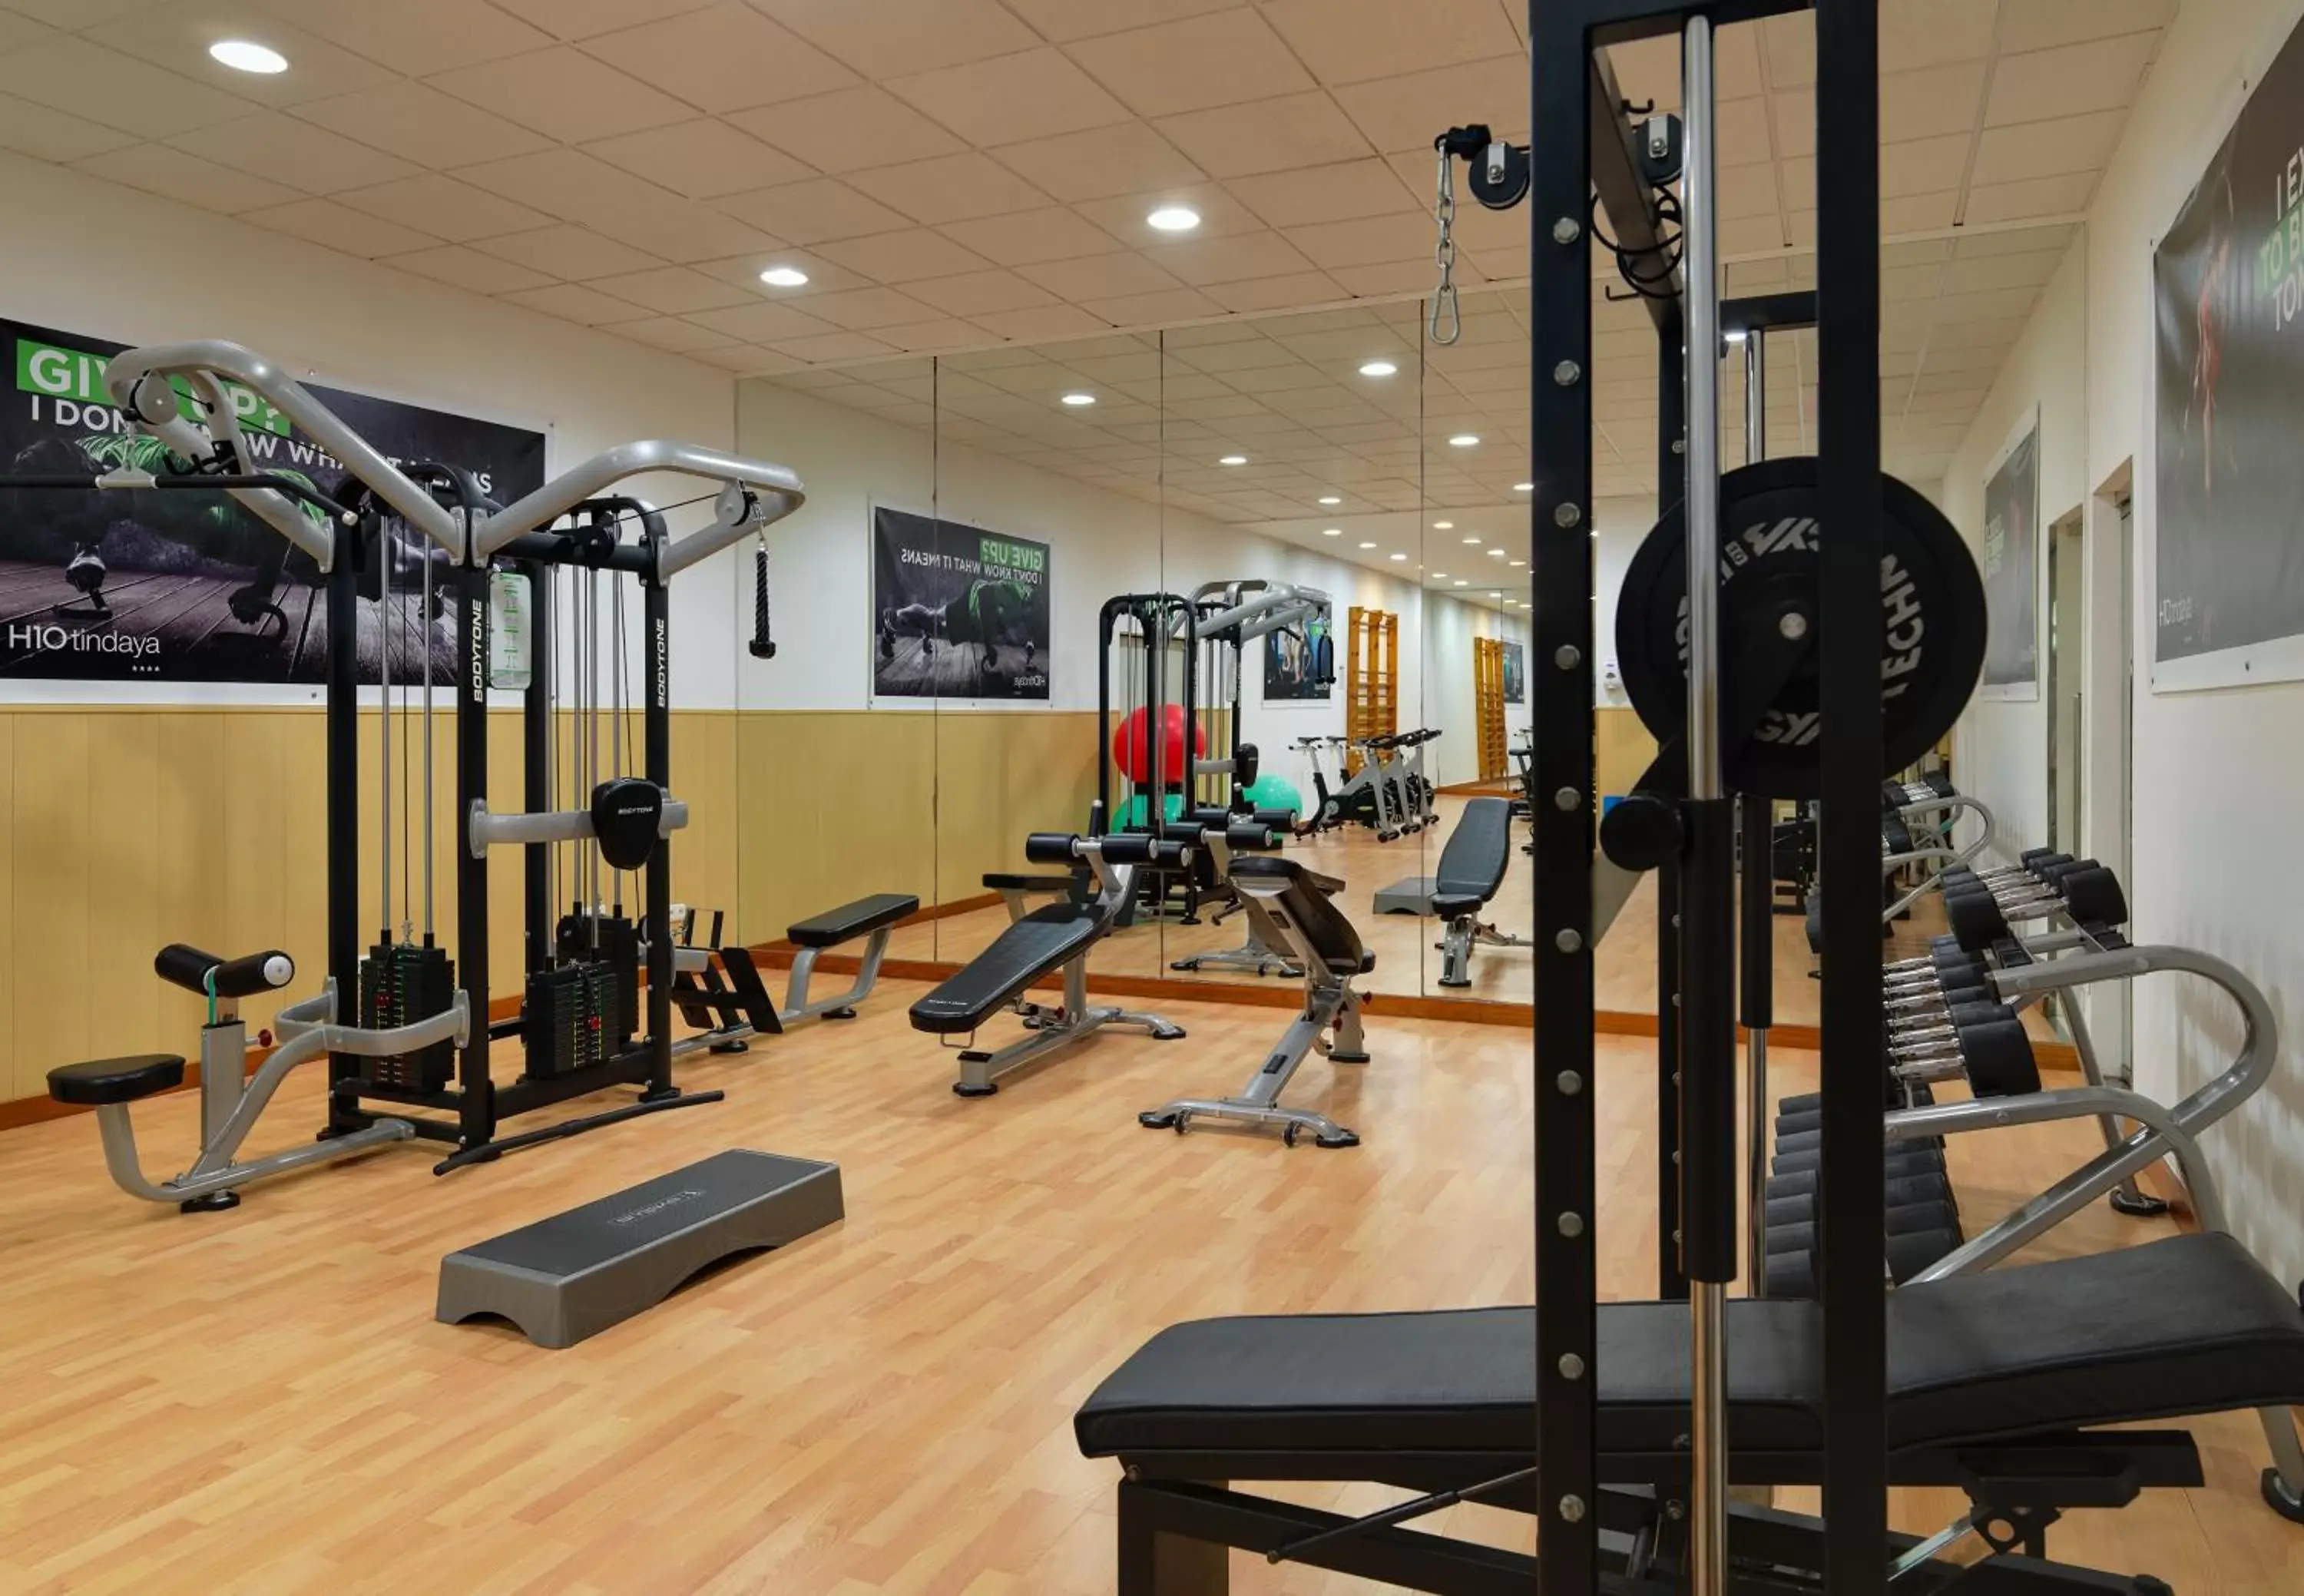 Fitness centre/facilities, Fitness Center/Facilities in H10 Tindaya